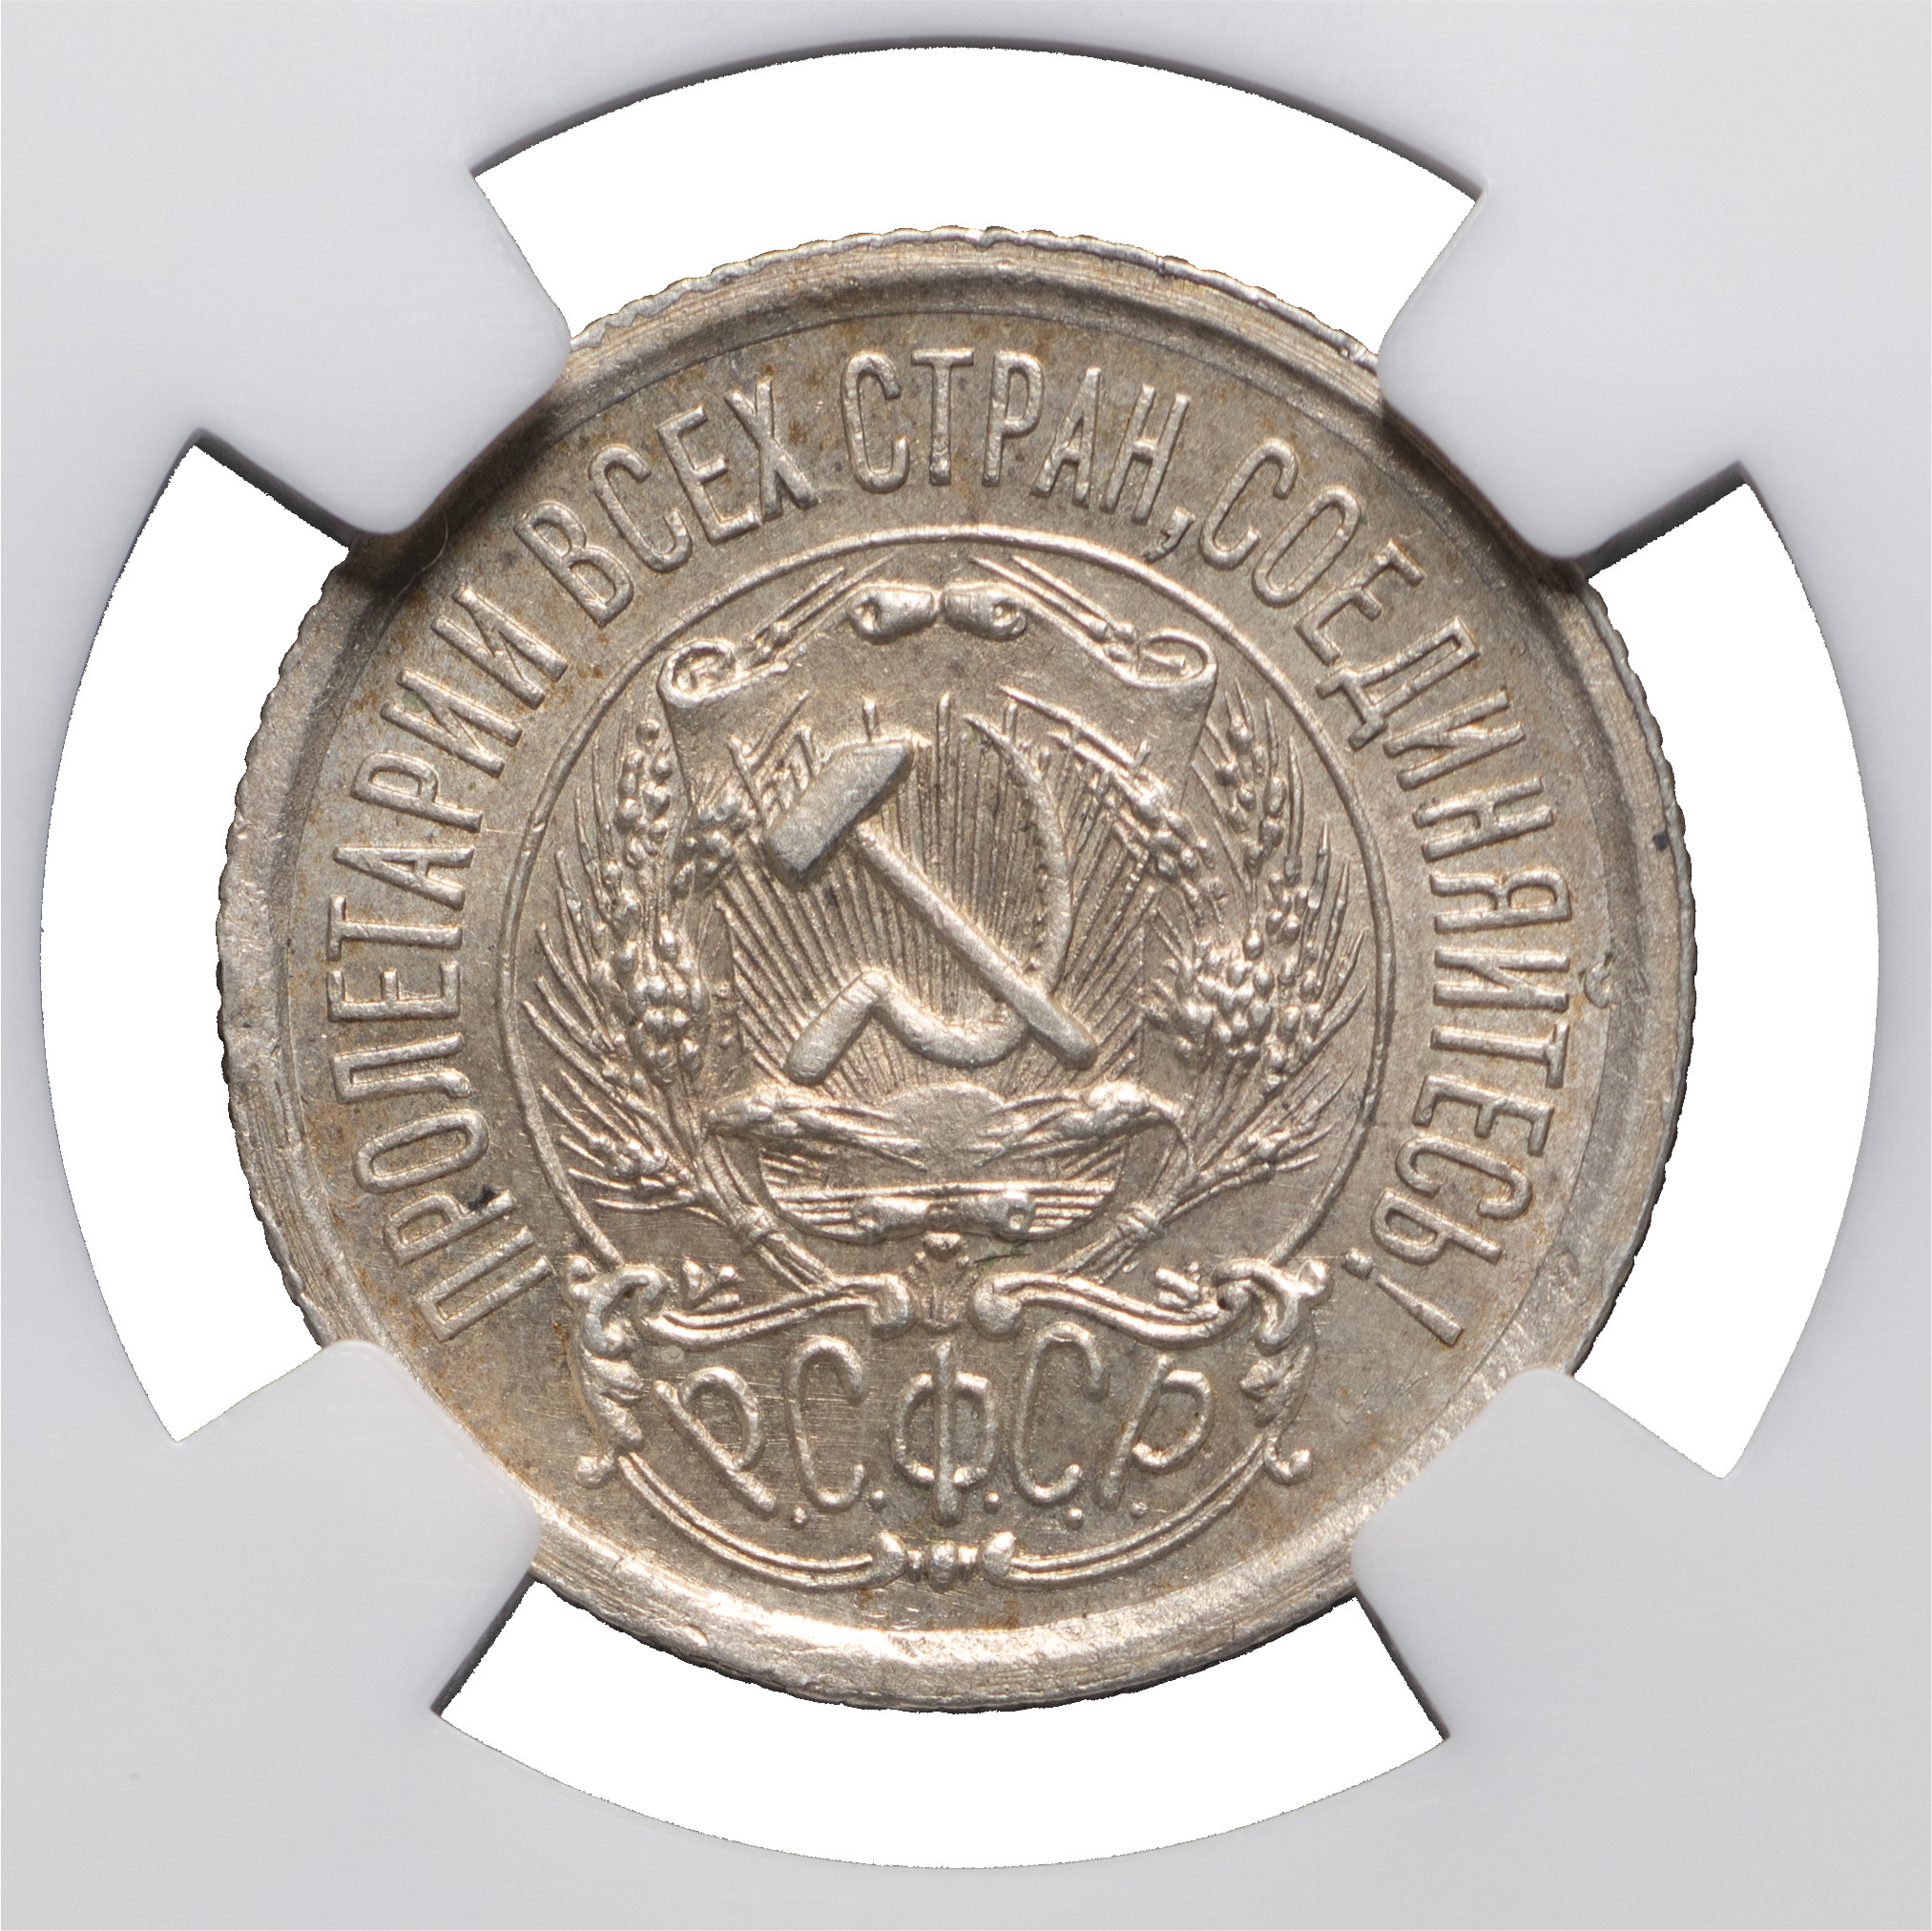 15 копеек 1923 года РСФСР